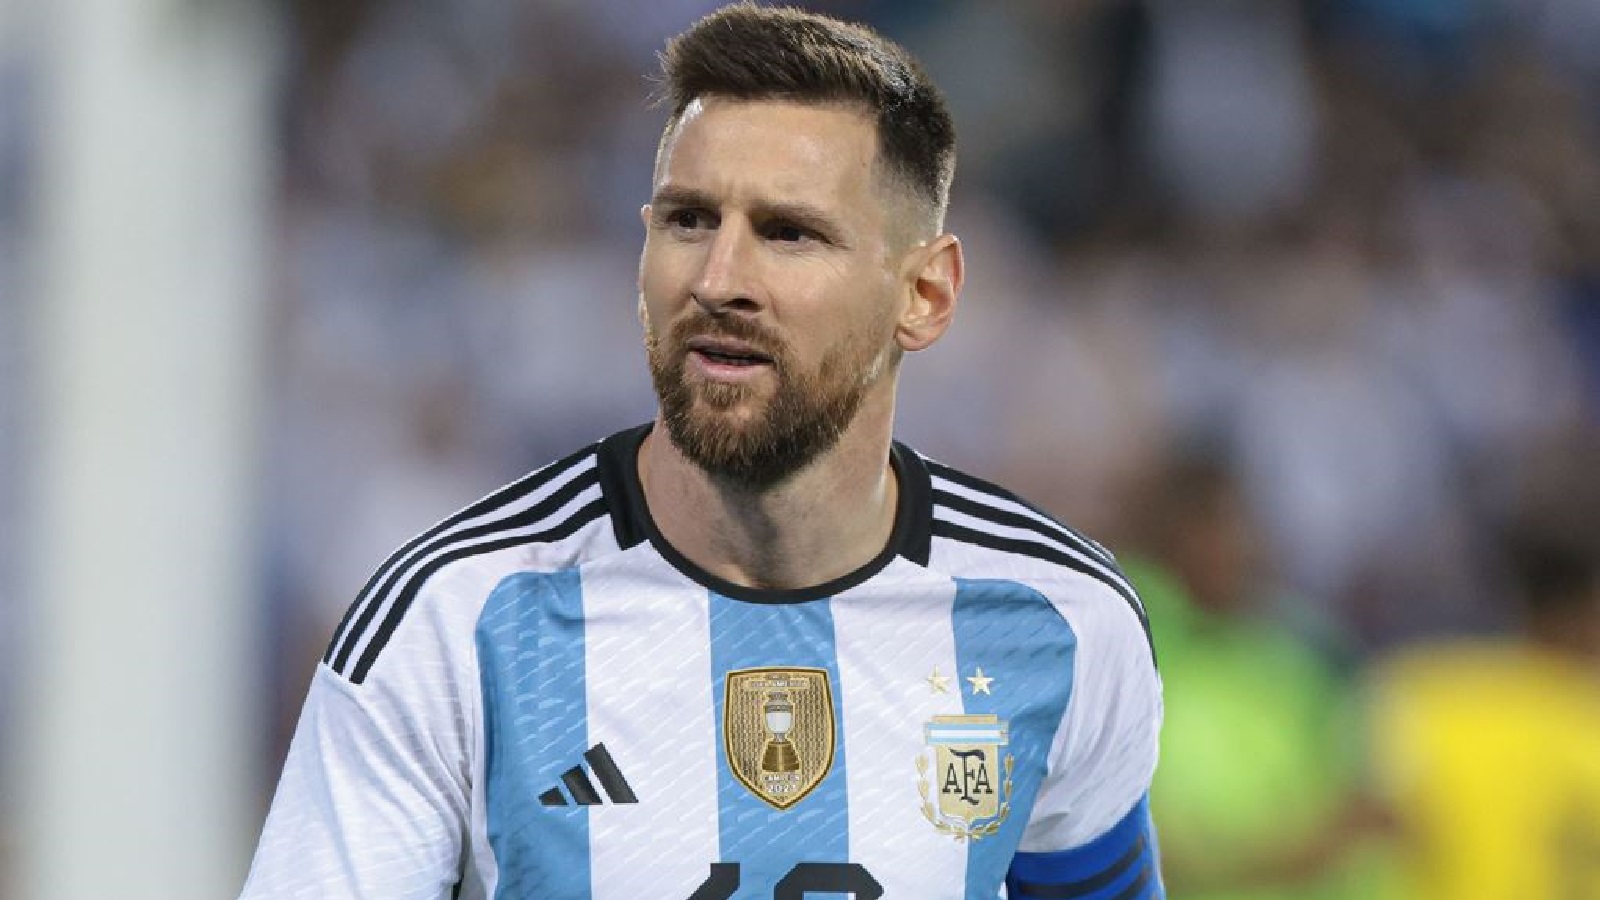 PSG to discipline Messi over unauthorized Saudi trip